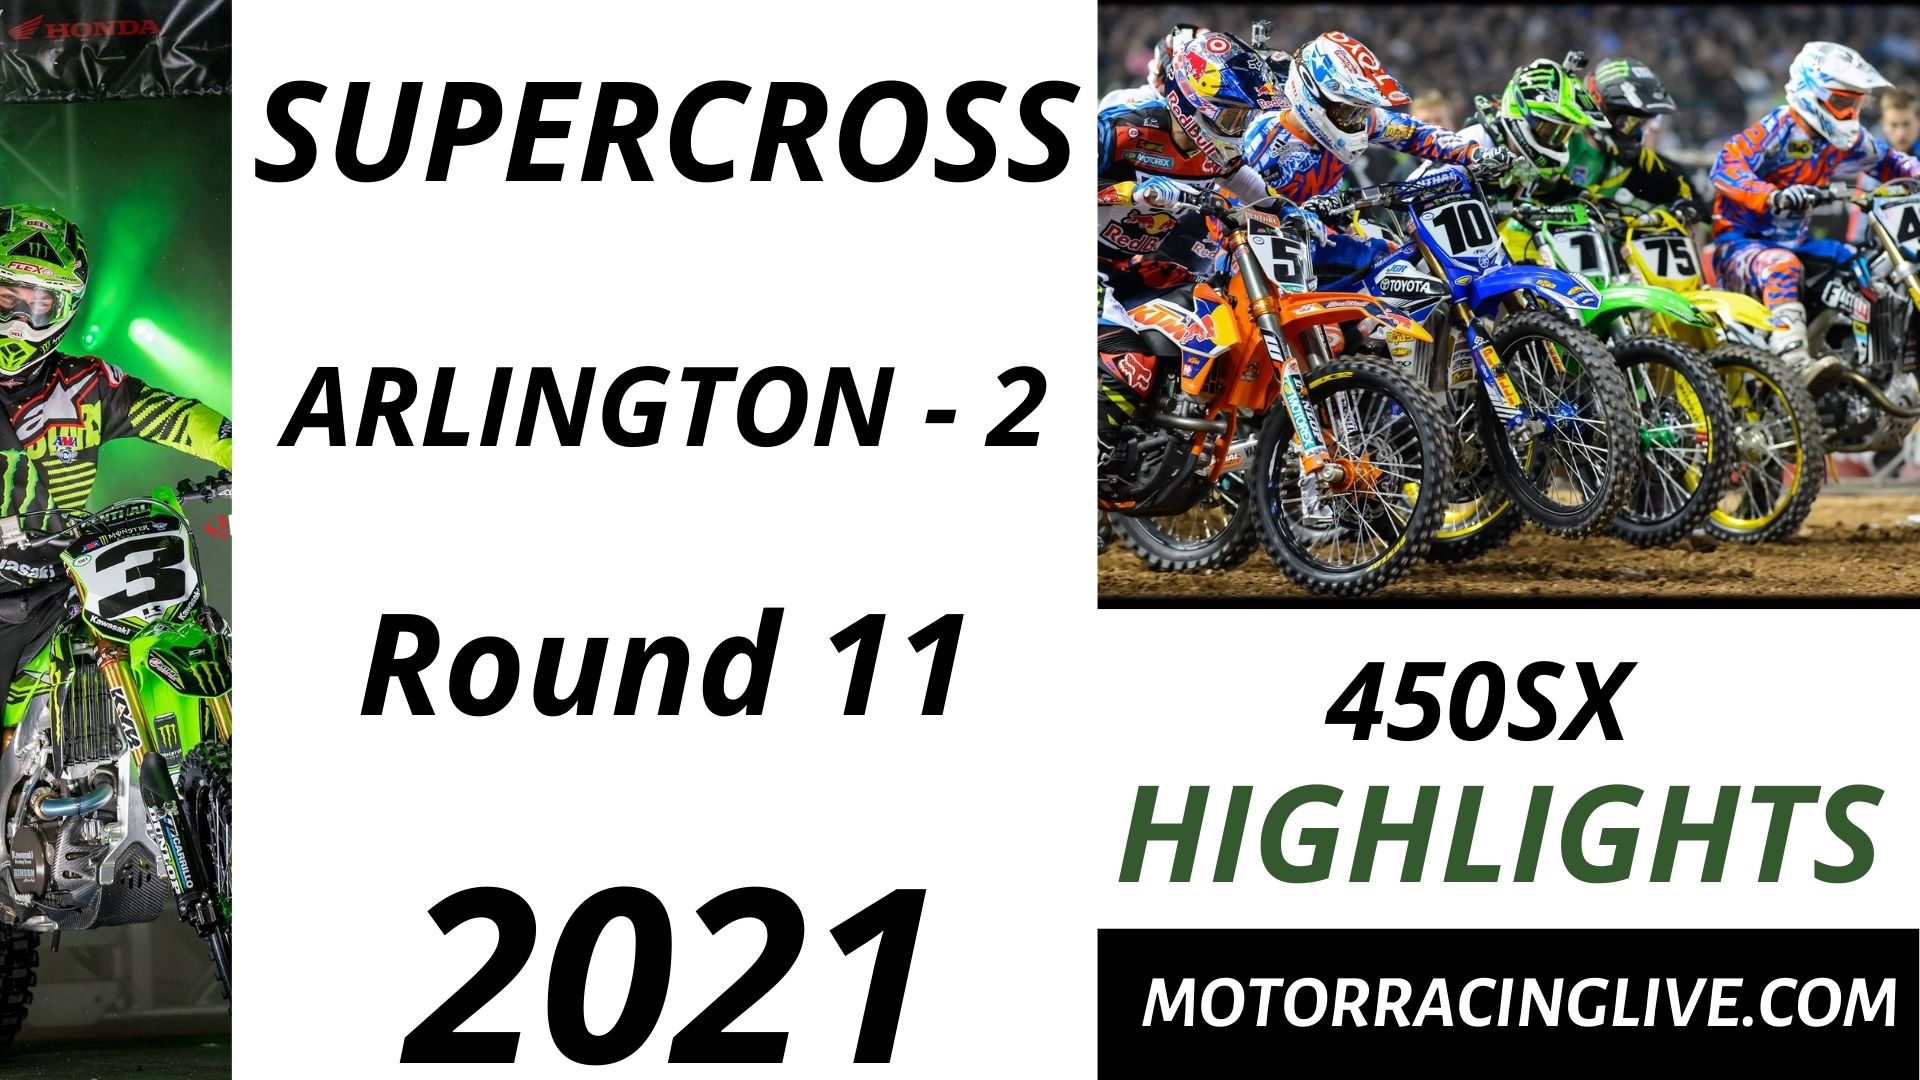 Arlington 2 Round 11 450SX Highlights 2021 Supercross